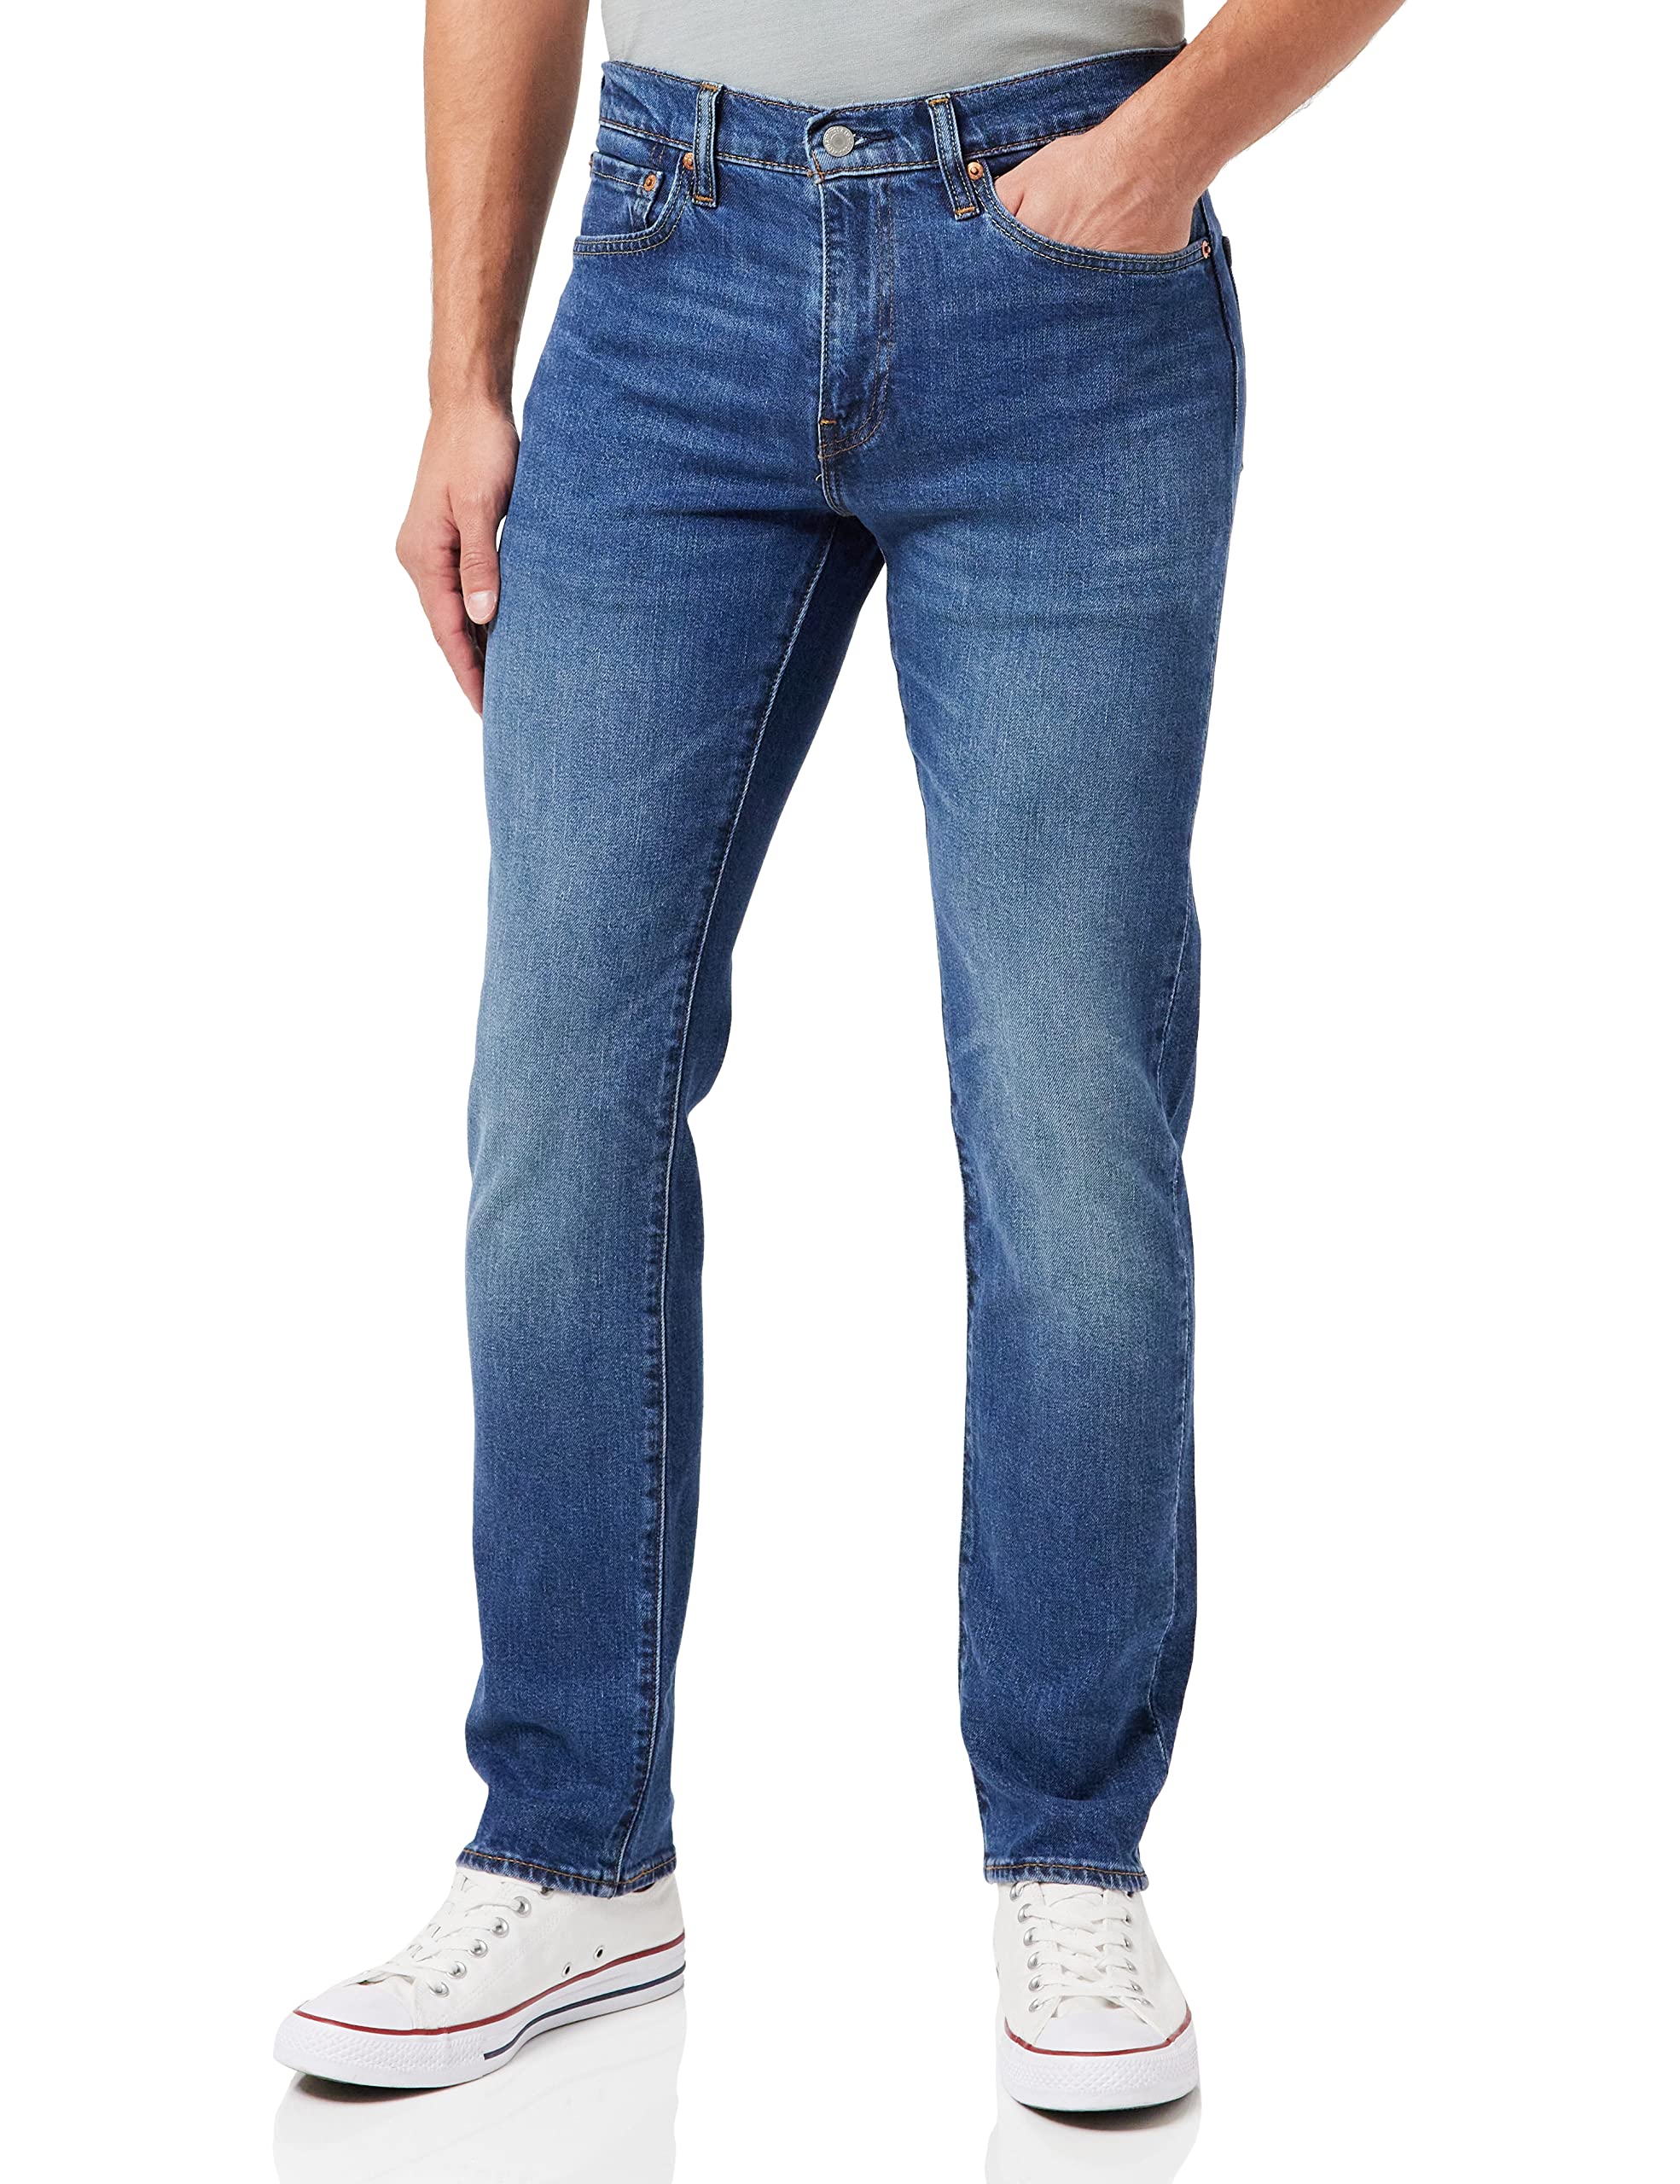 Levi's Herren 511™ Slim Jeans,Poncho And Righty Adv,30W / 32L